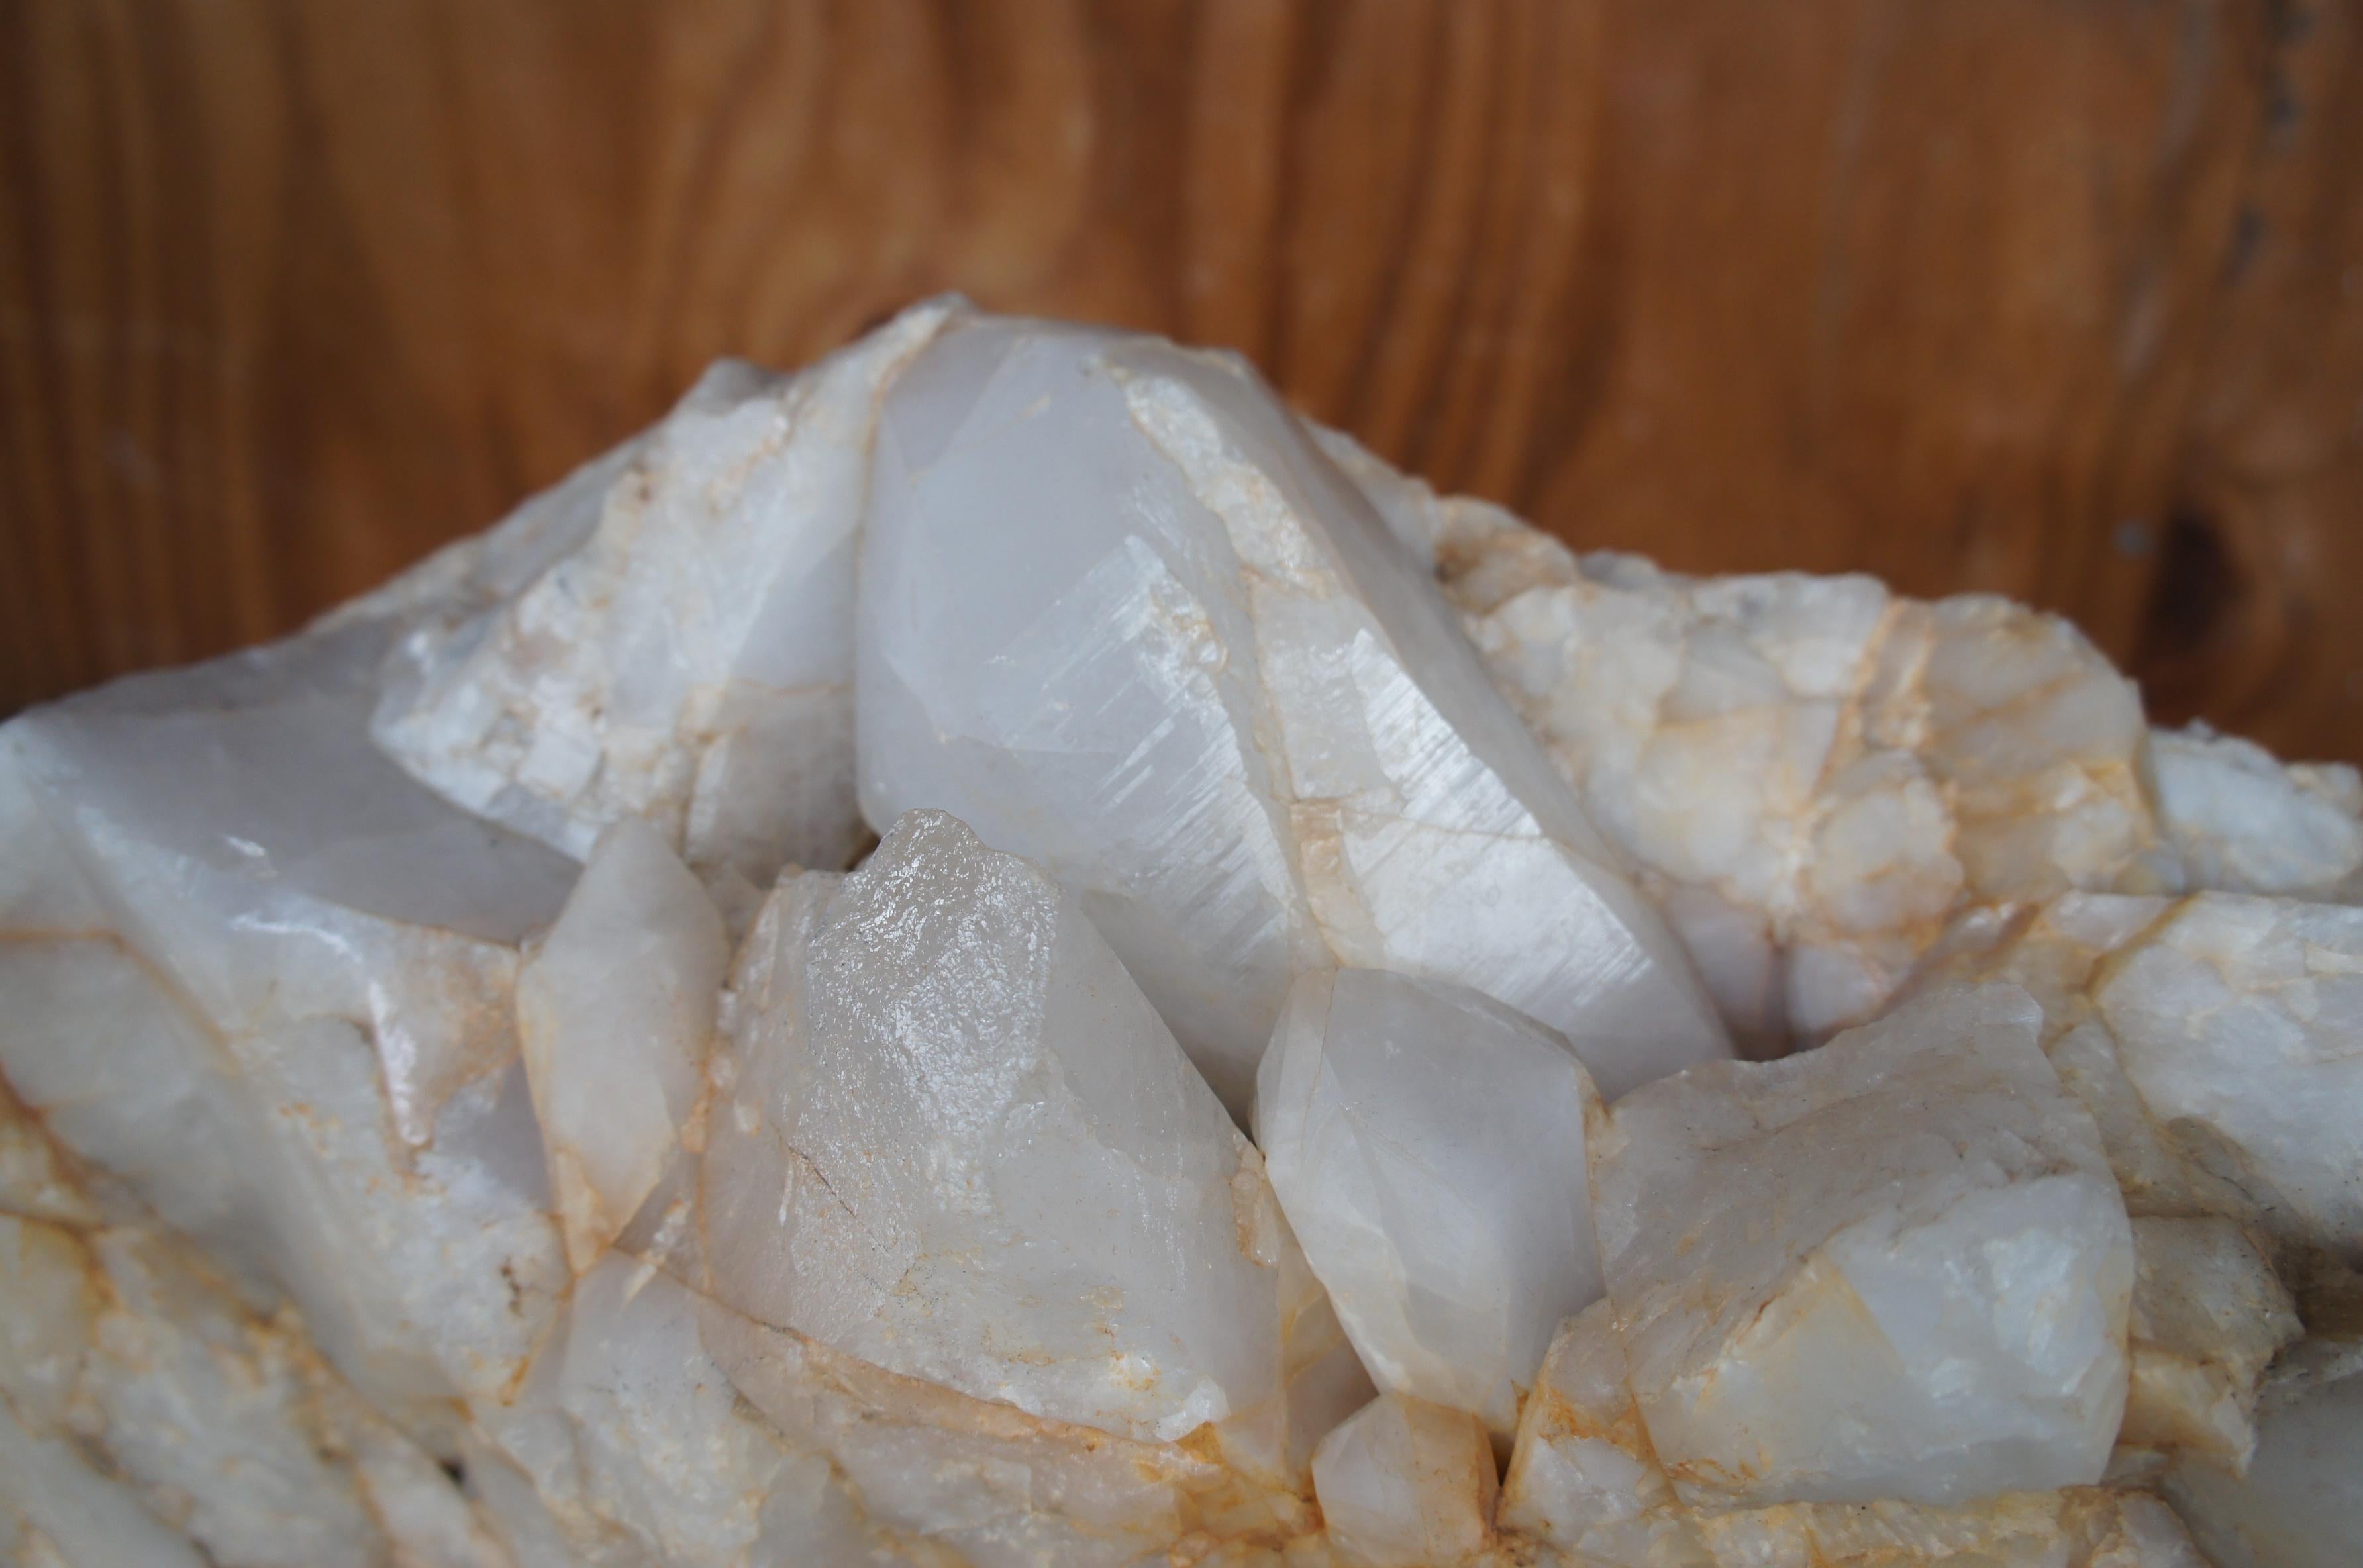 Primitive 90lb Natural White Quartz Crystal Rock Stone Formation Healing Cluster For Sale